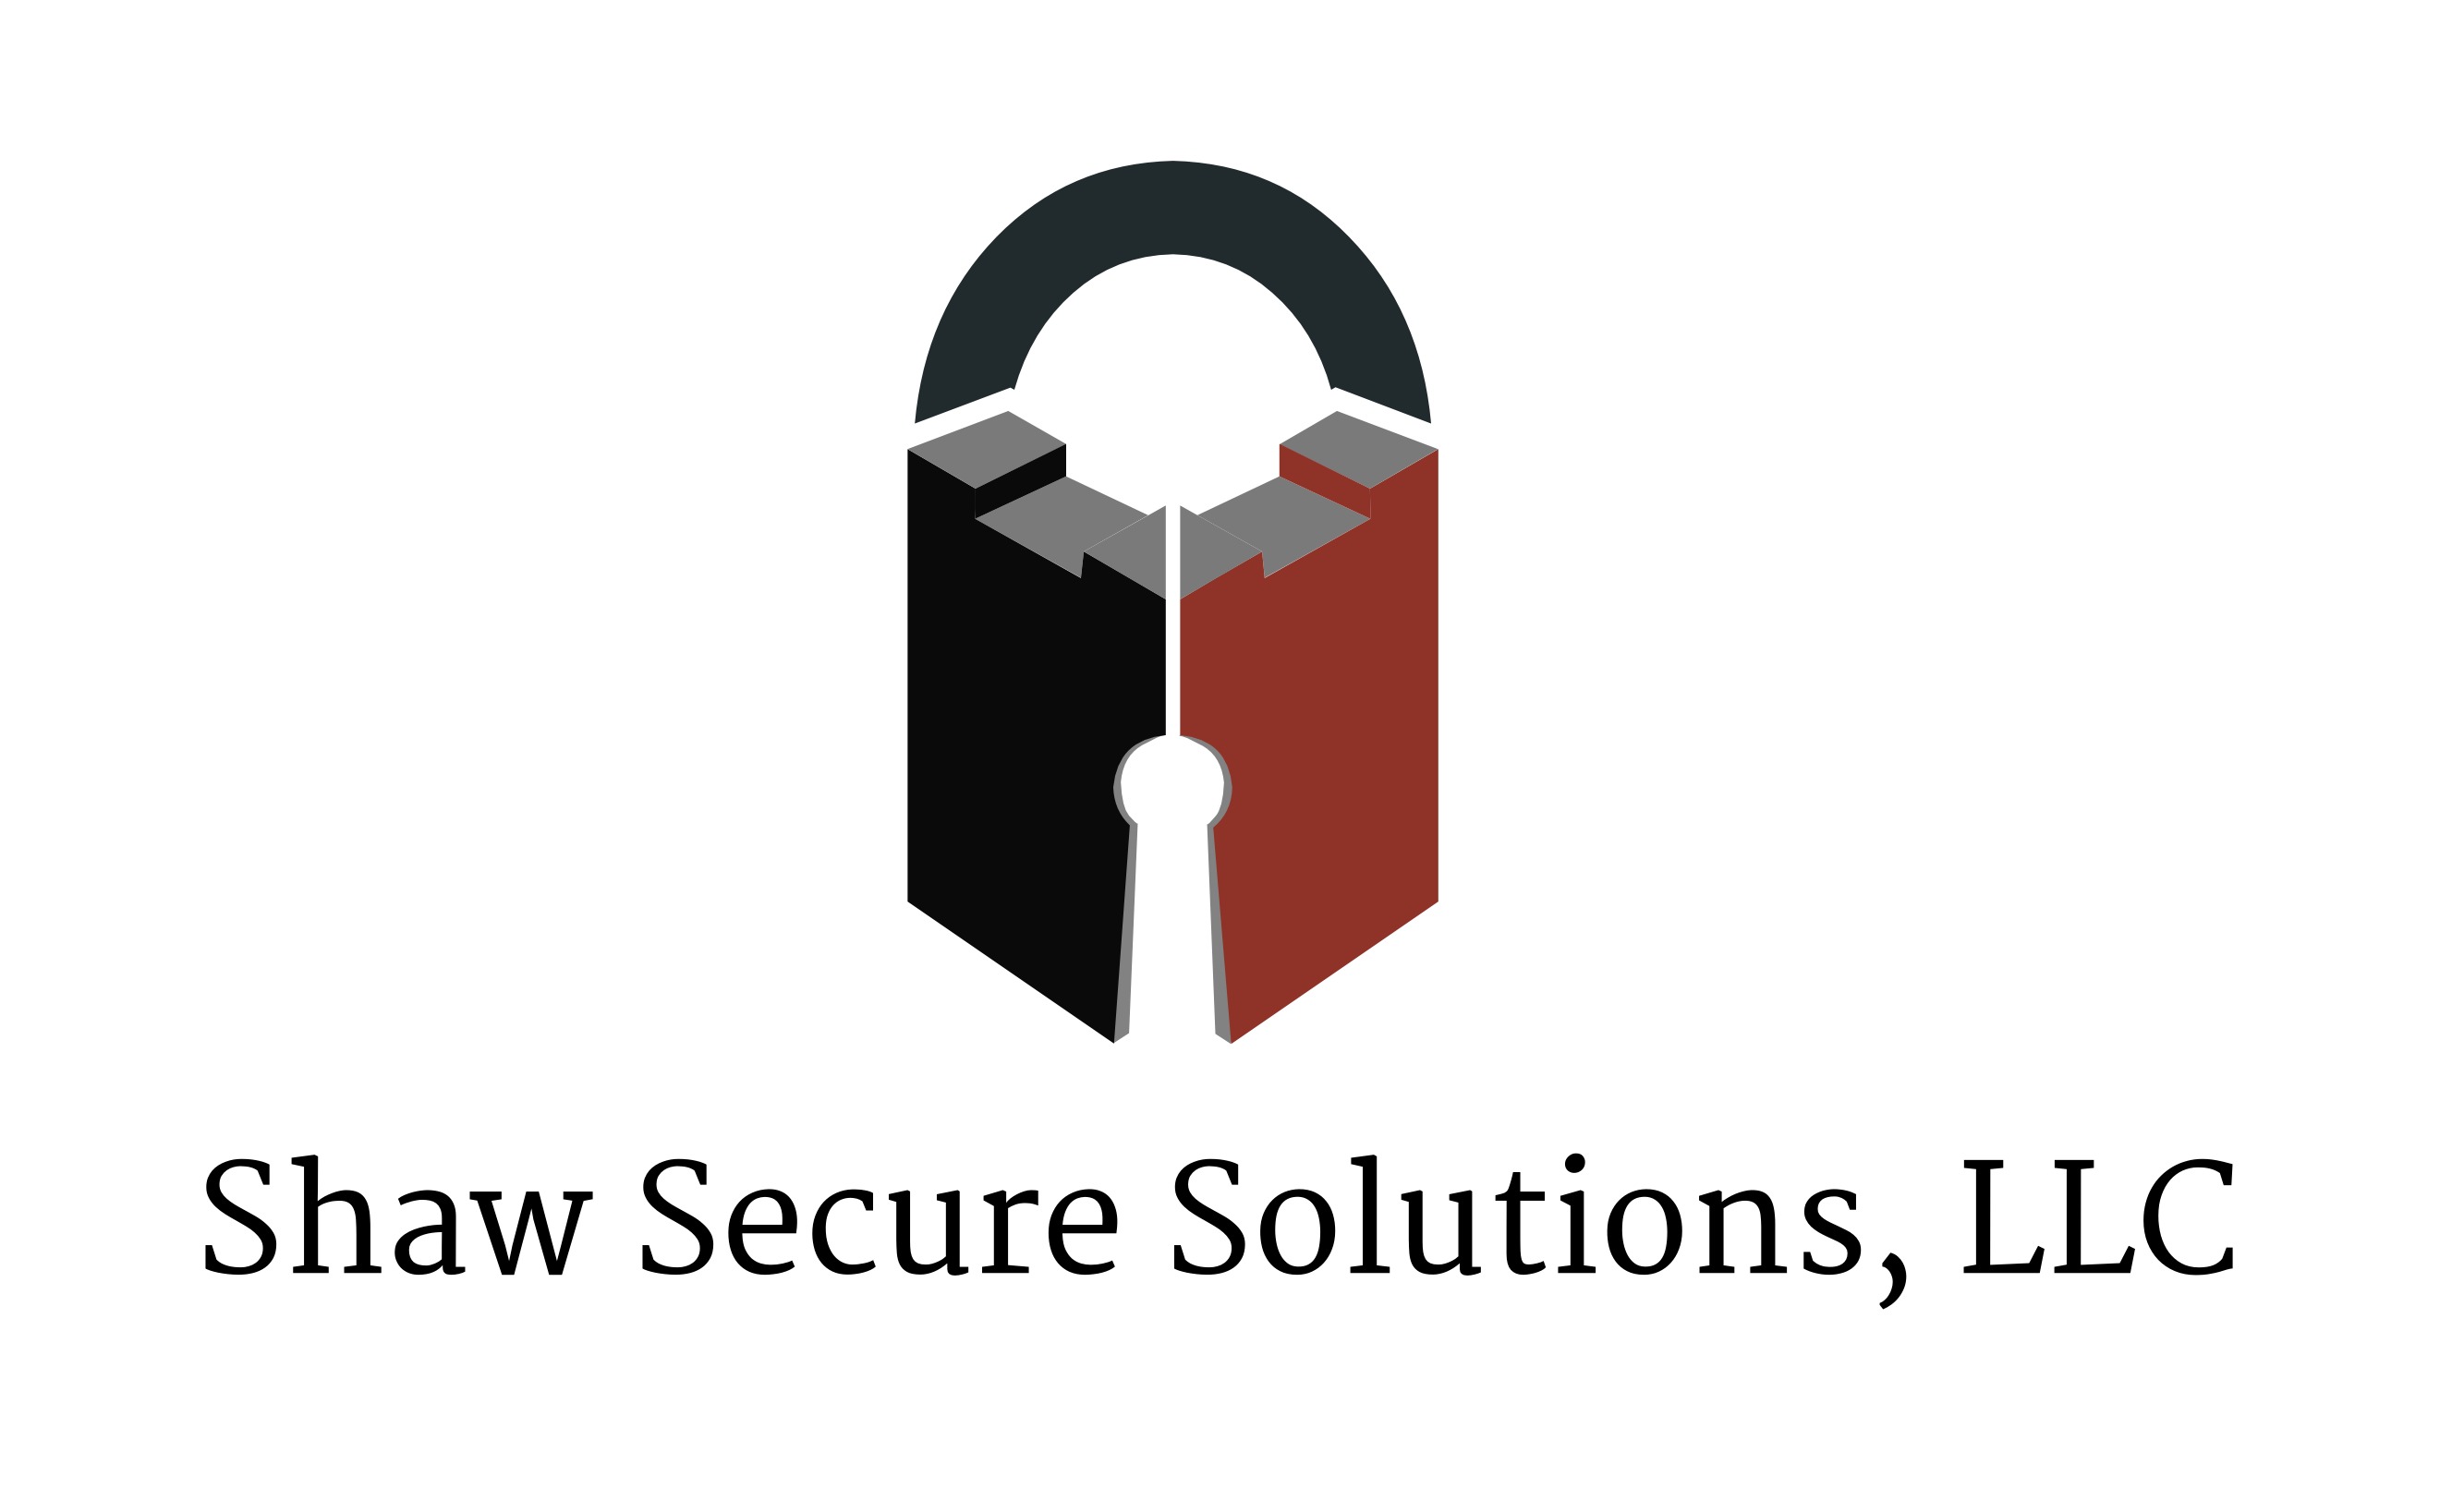 Shaw Secure Solutions, LLC